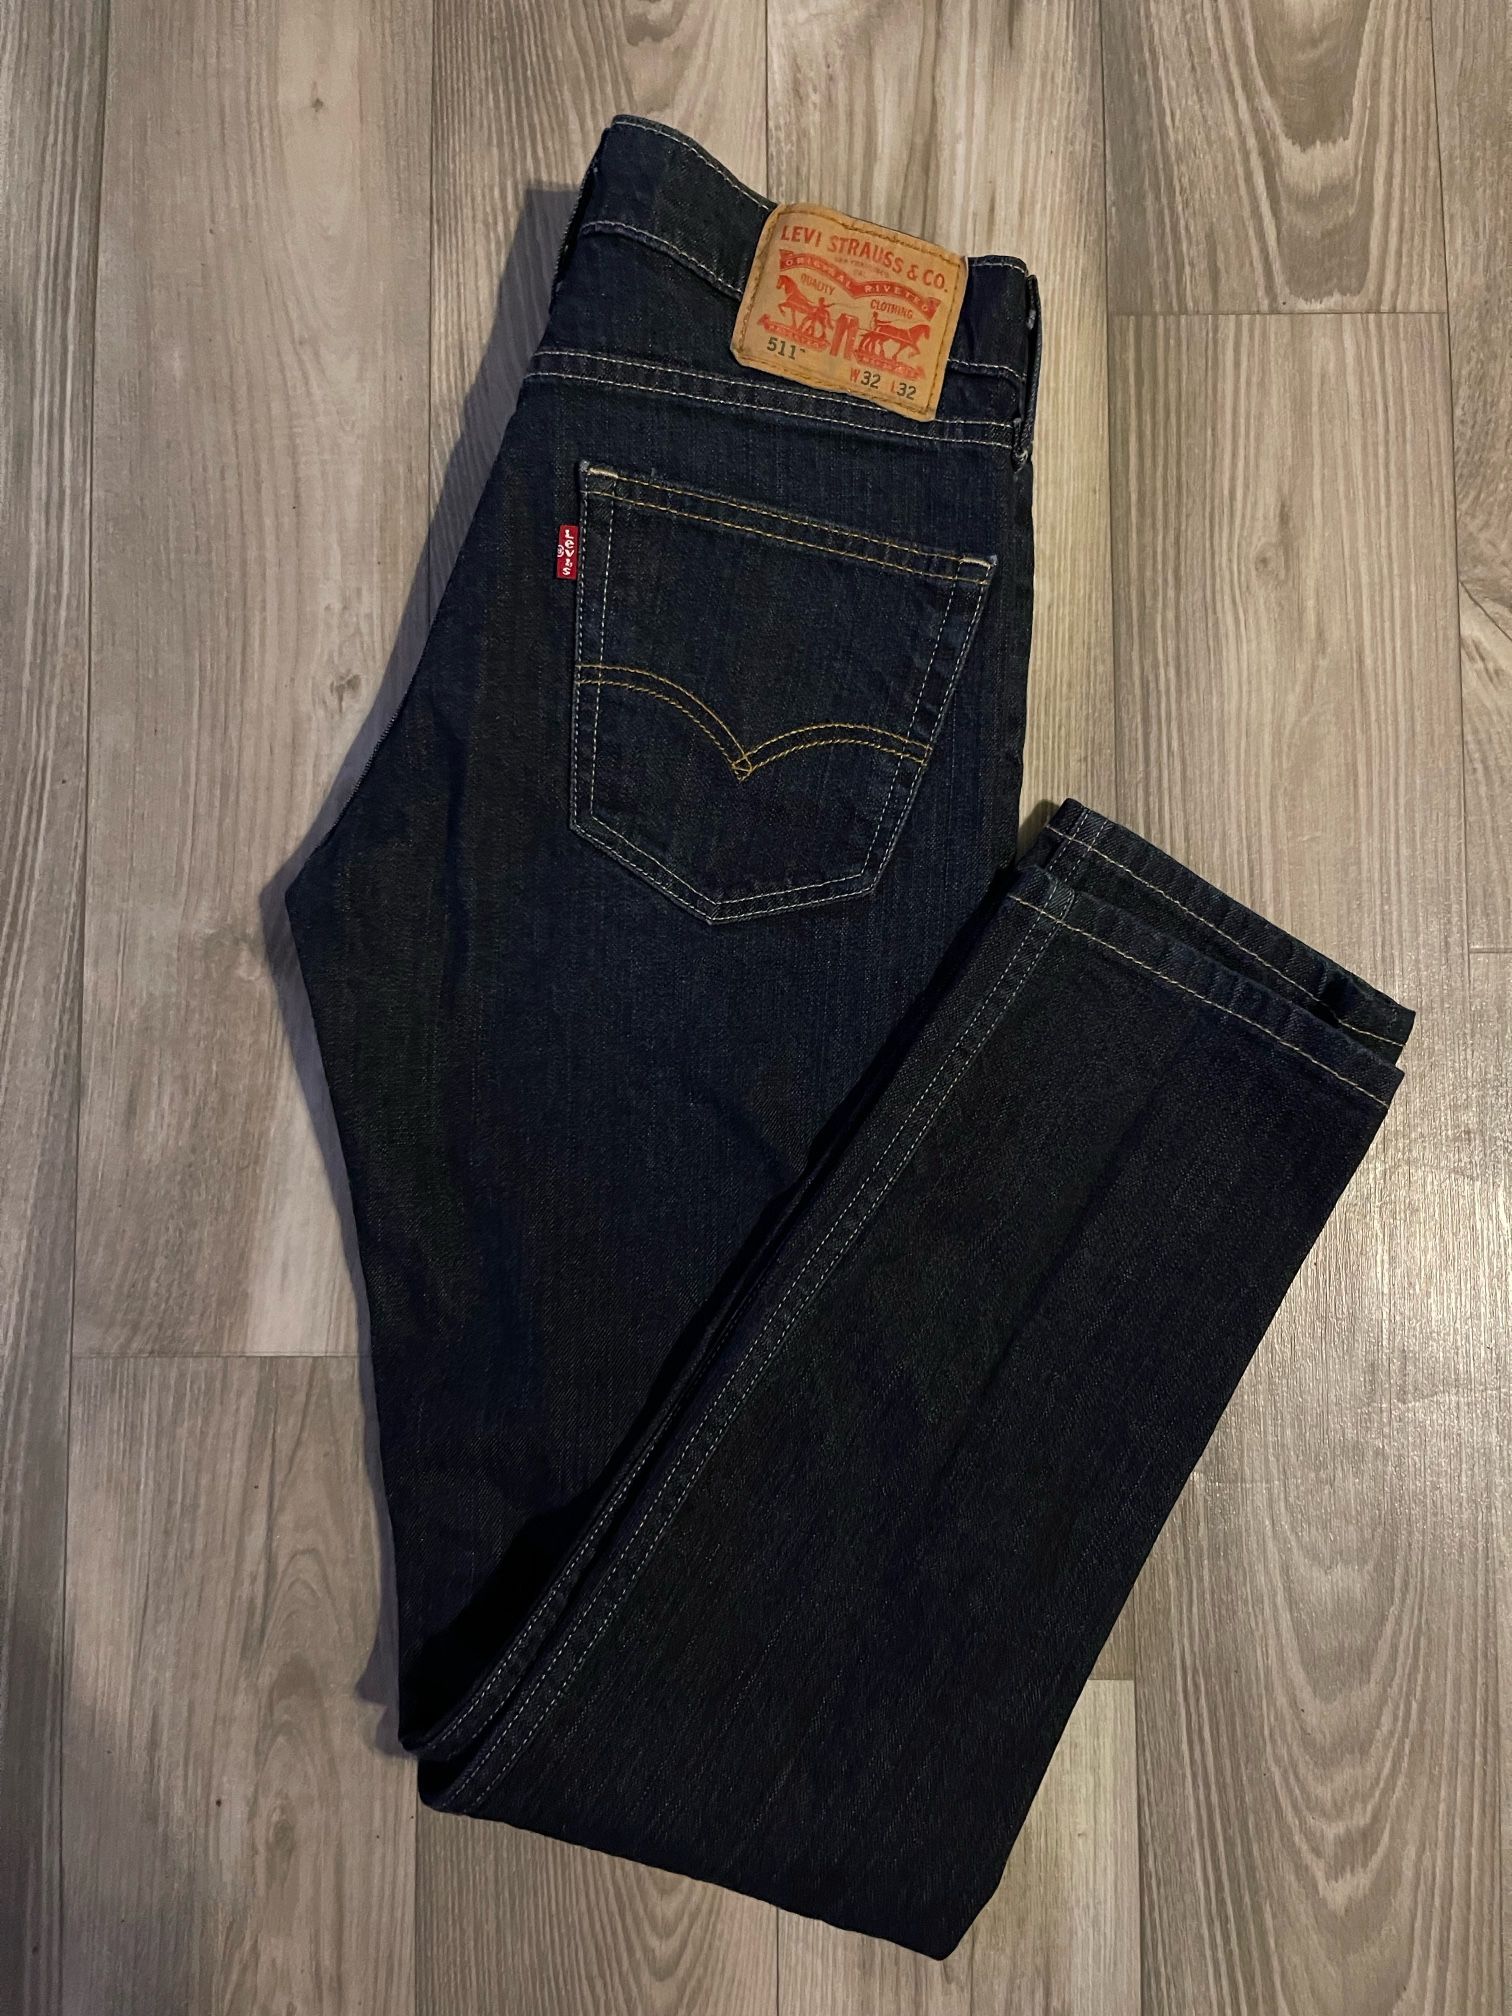 32w/32l 511 Levi’s Jeans $15 